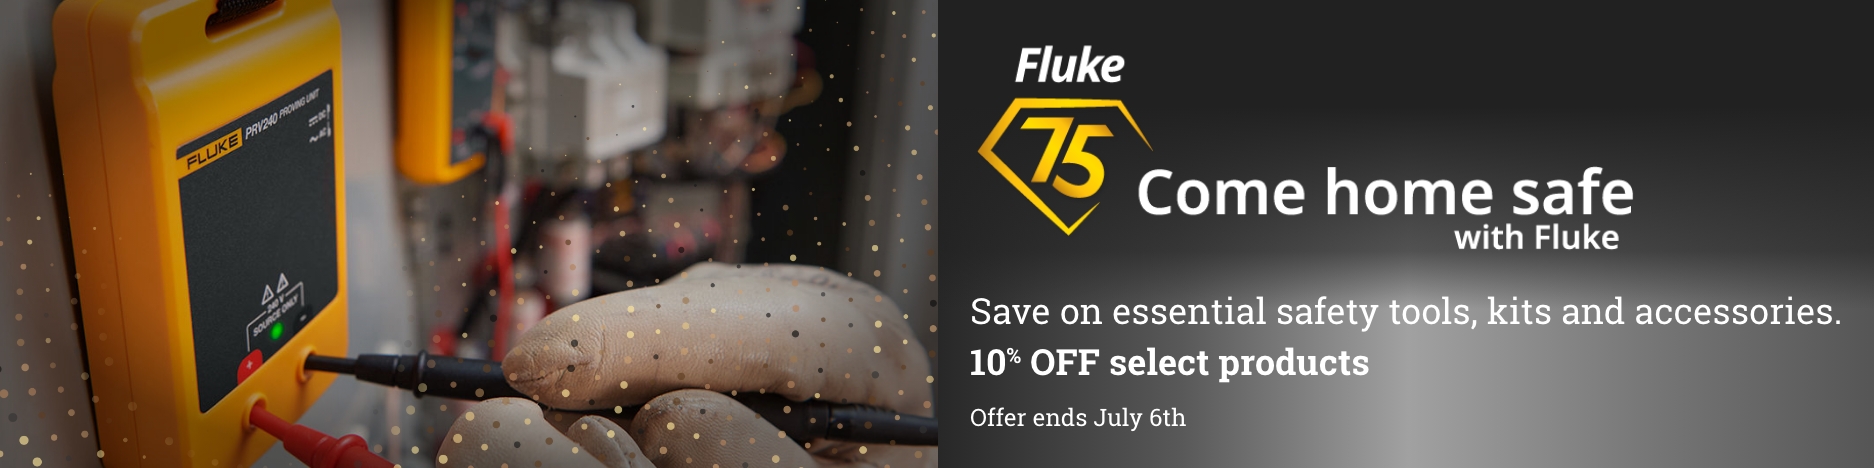 Shop Fluke Products Banner - 75 years of Fluke innovation Save 10% OFF on Fluke select products